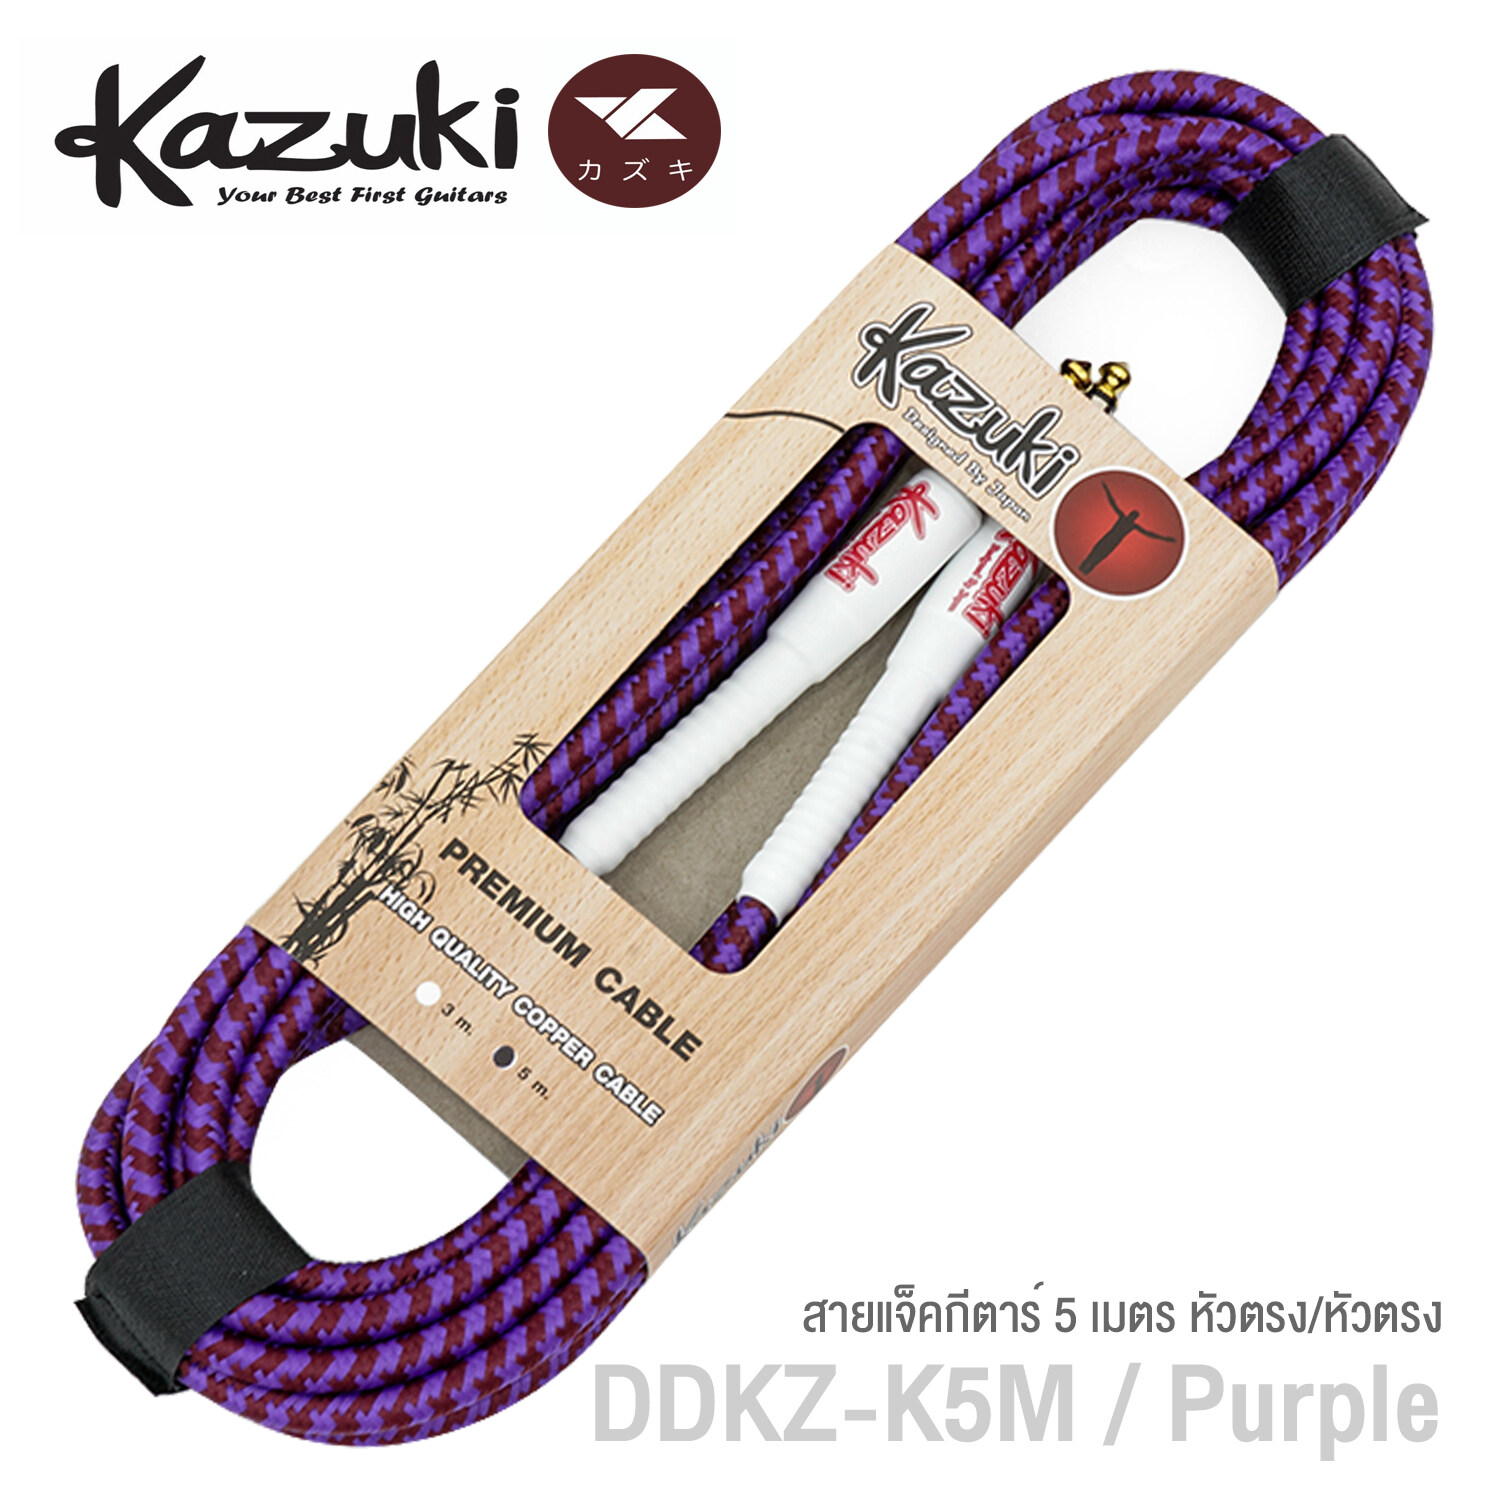 Kazuki DDKZ-K5M Purple